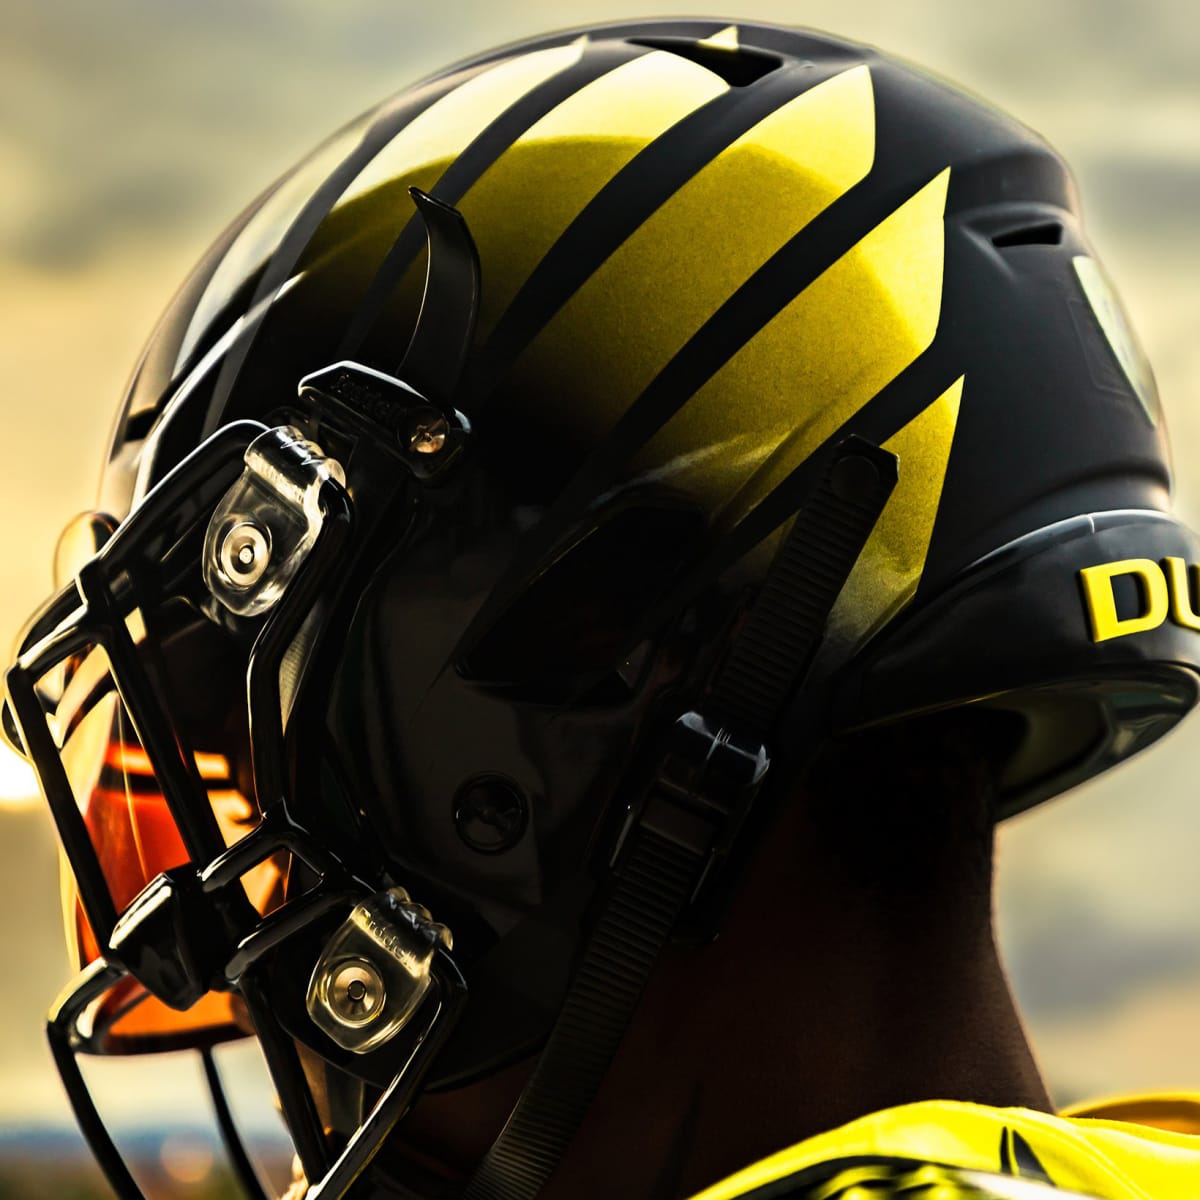 Oregon Football on X: Saturday's uniform: Yellow helmet, jersey